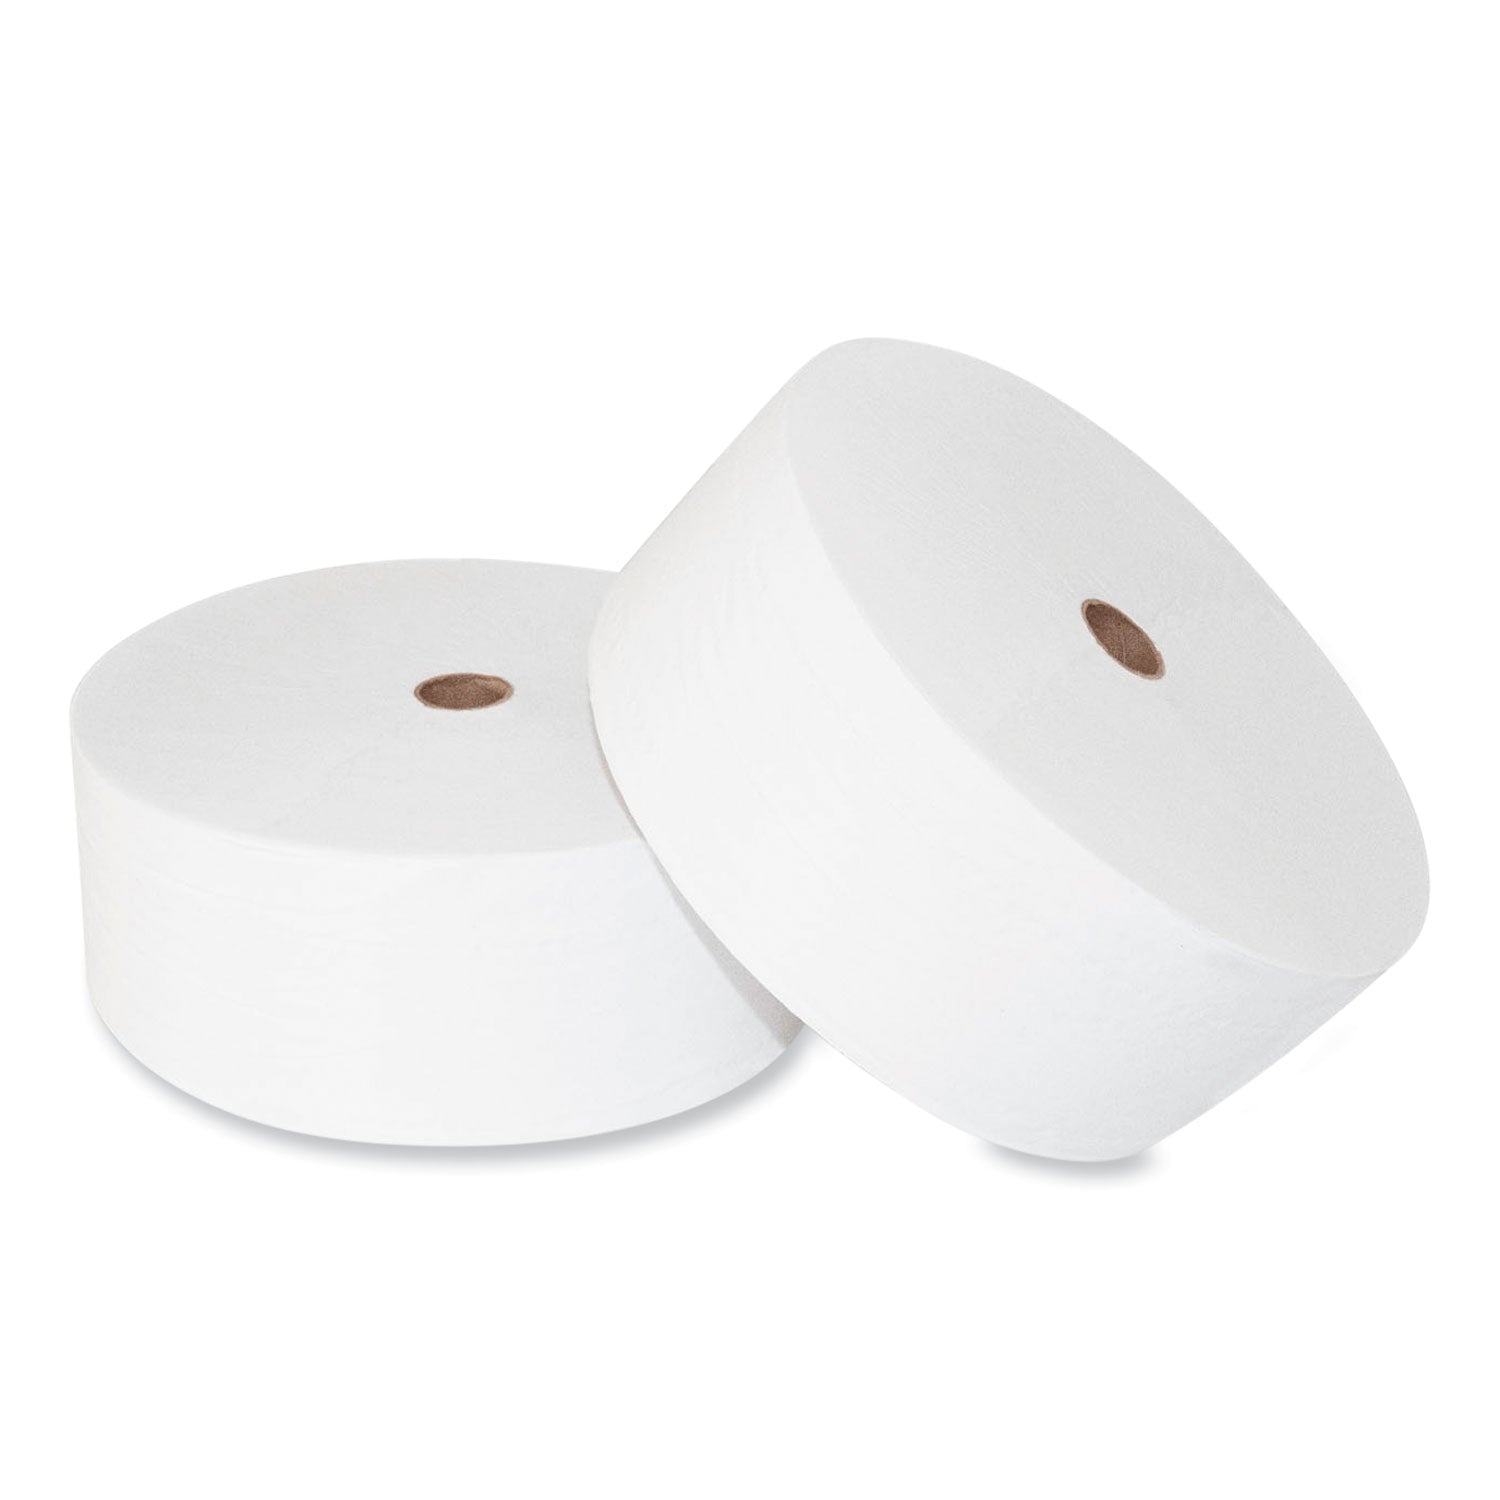 small-core-bath-tissue-septic-safe-2-ply-white-1200-sheets-roll-12-rolls-carton_morvt1200 - 2